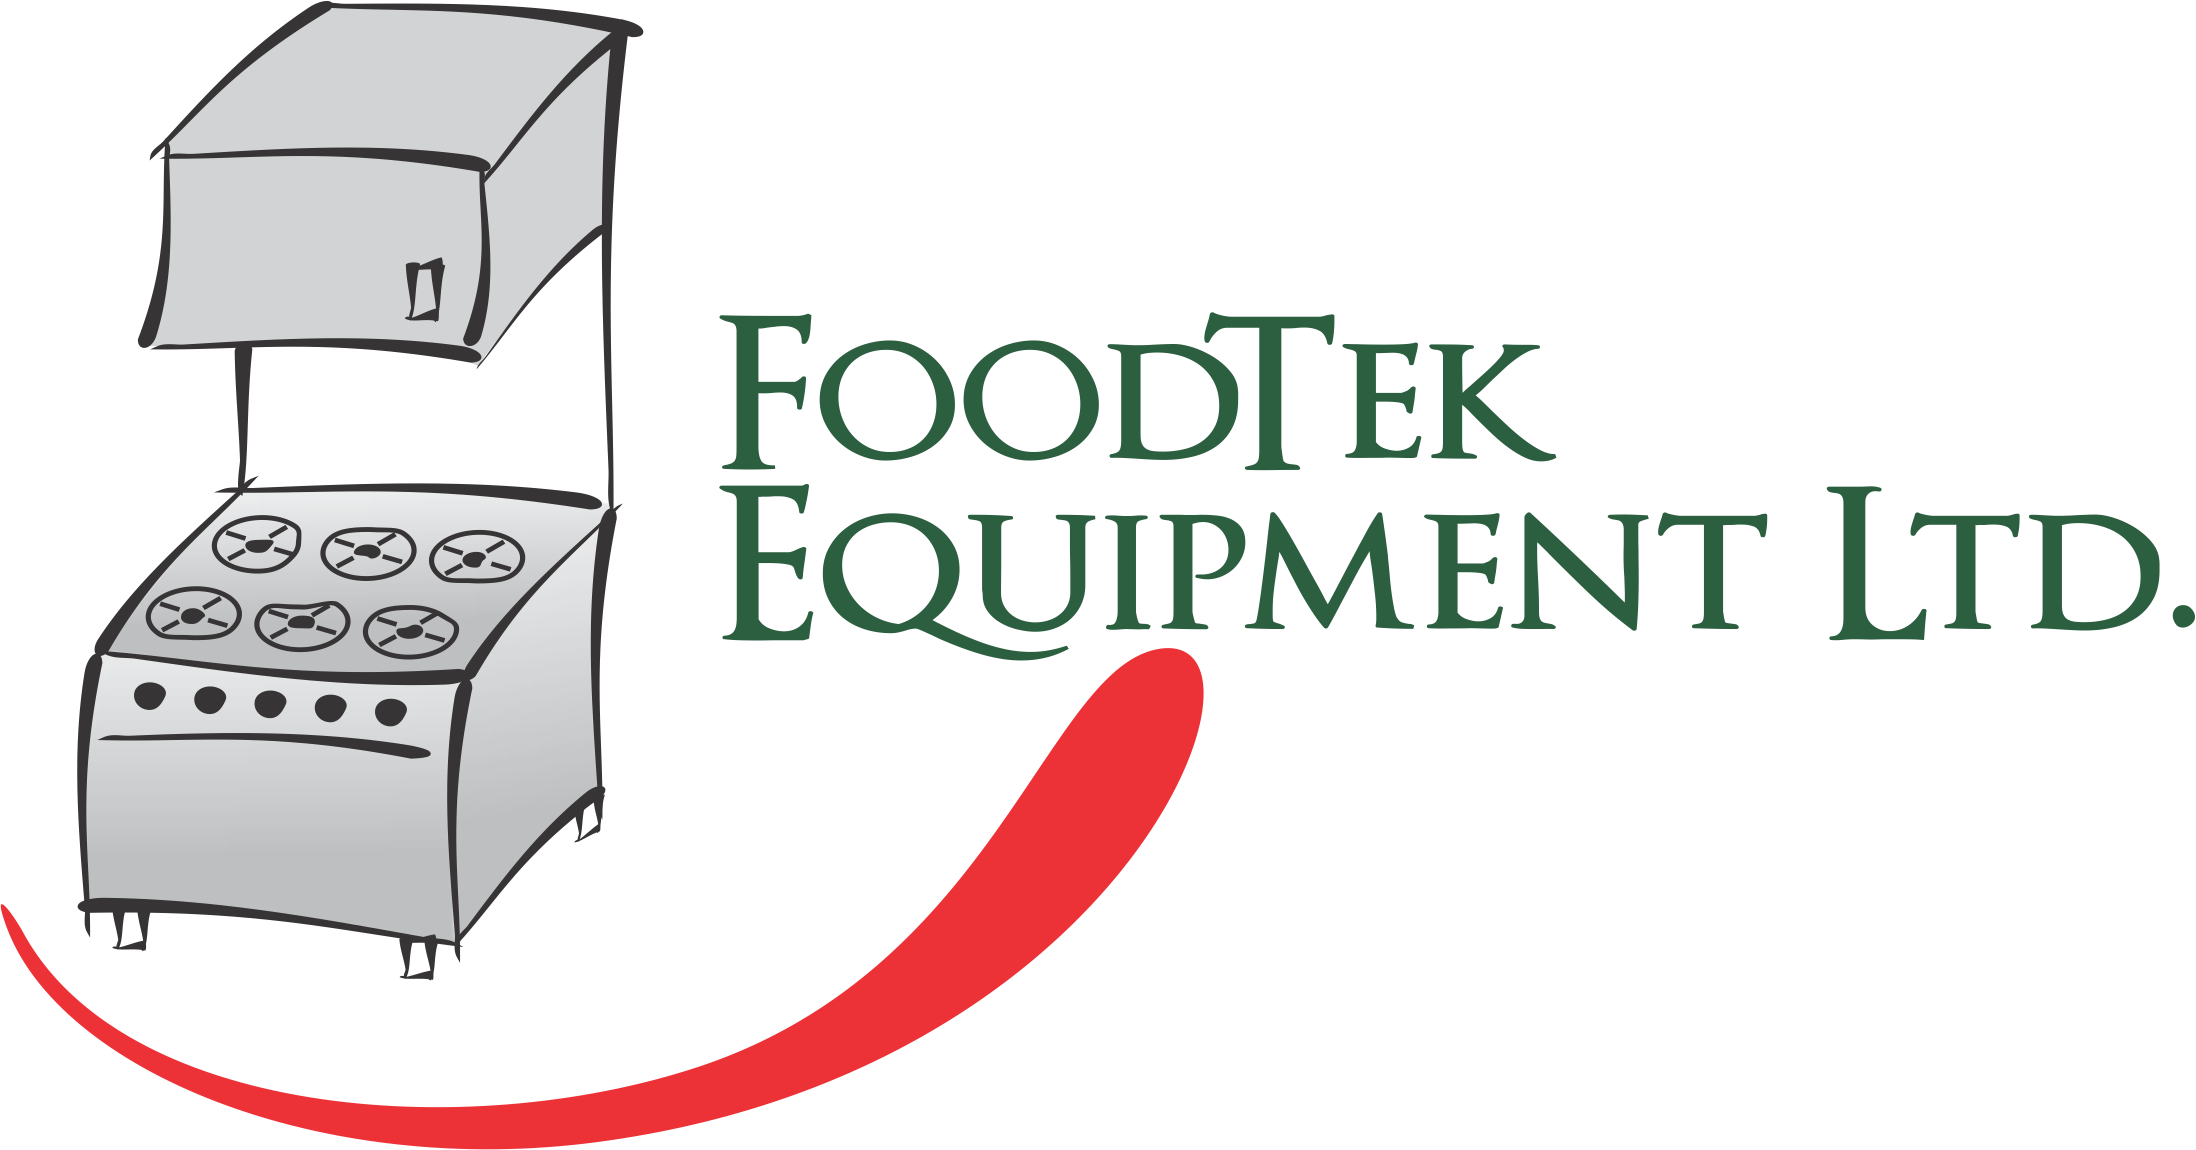 Foodtek Equipment Limited